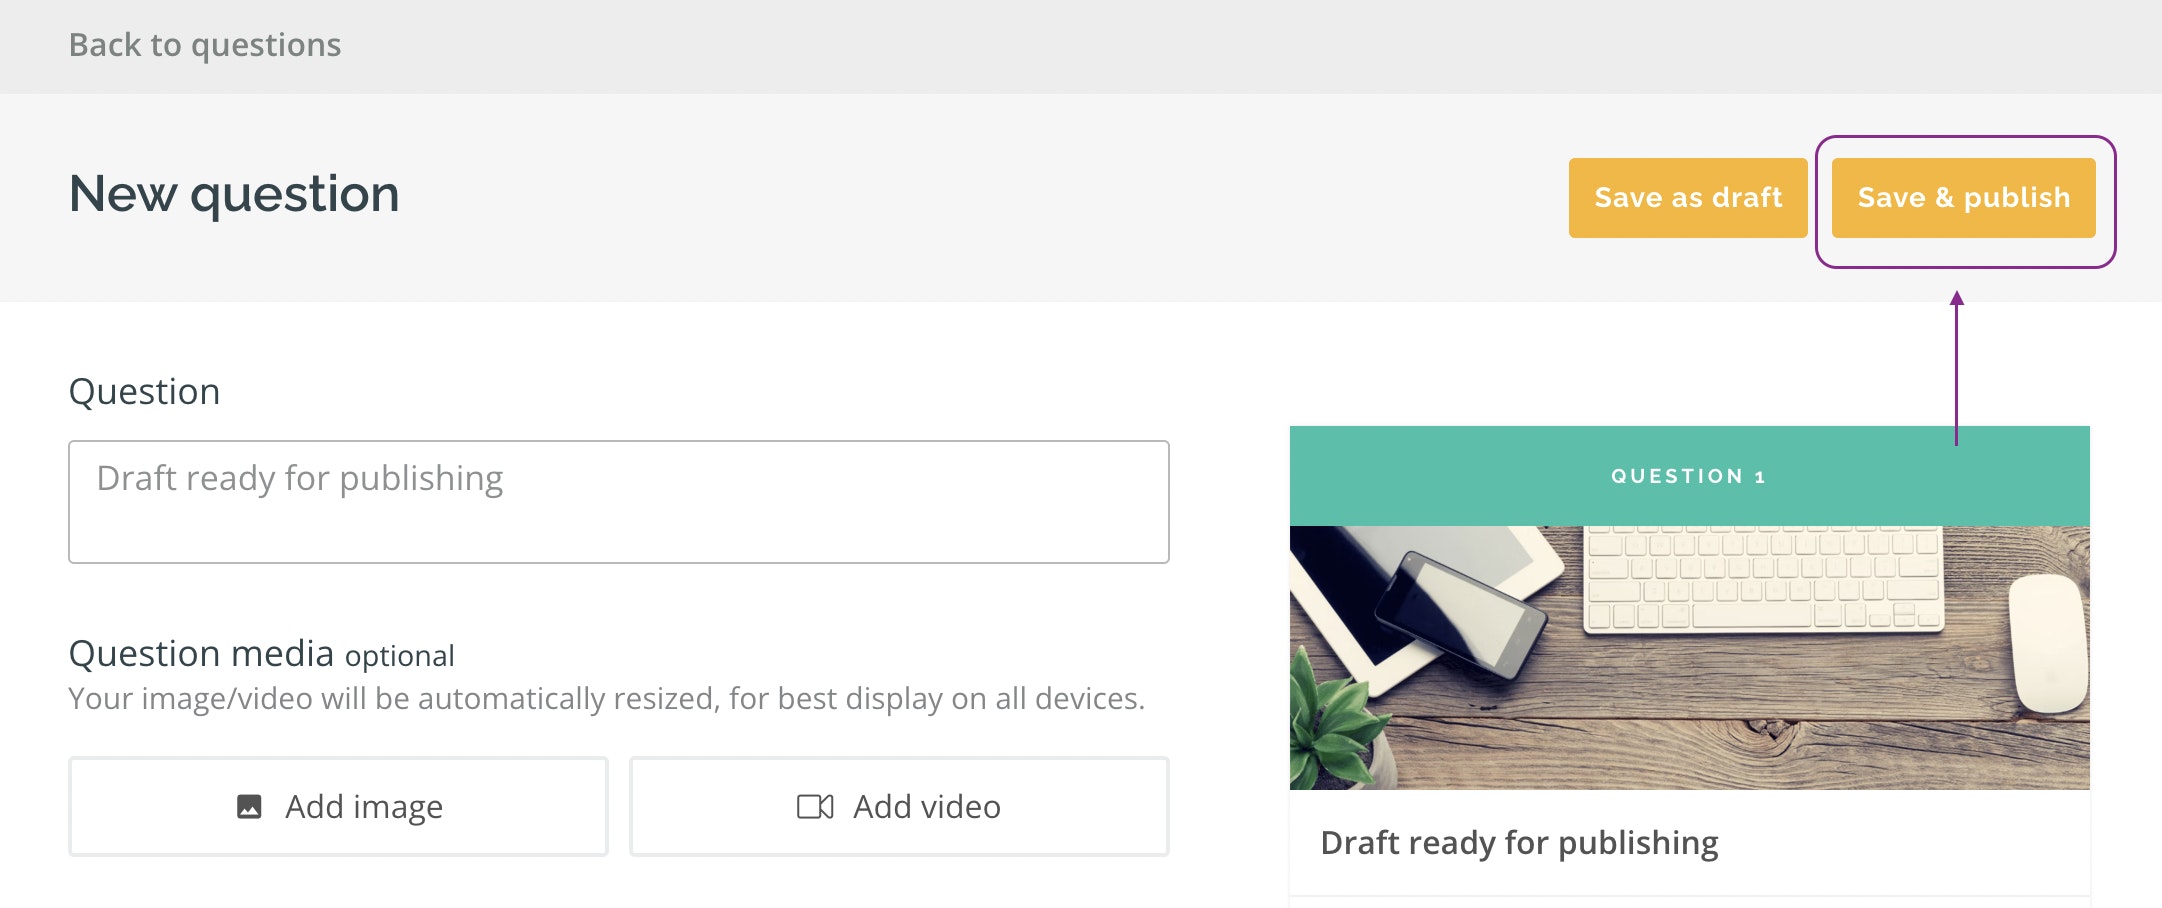 Screenshot of 'Save & publish' option